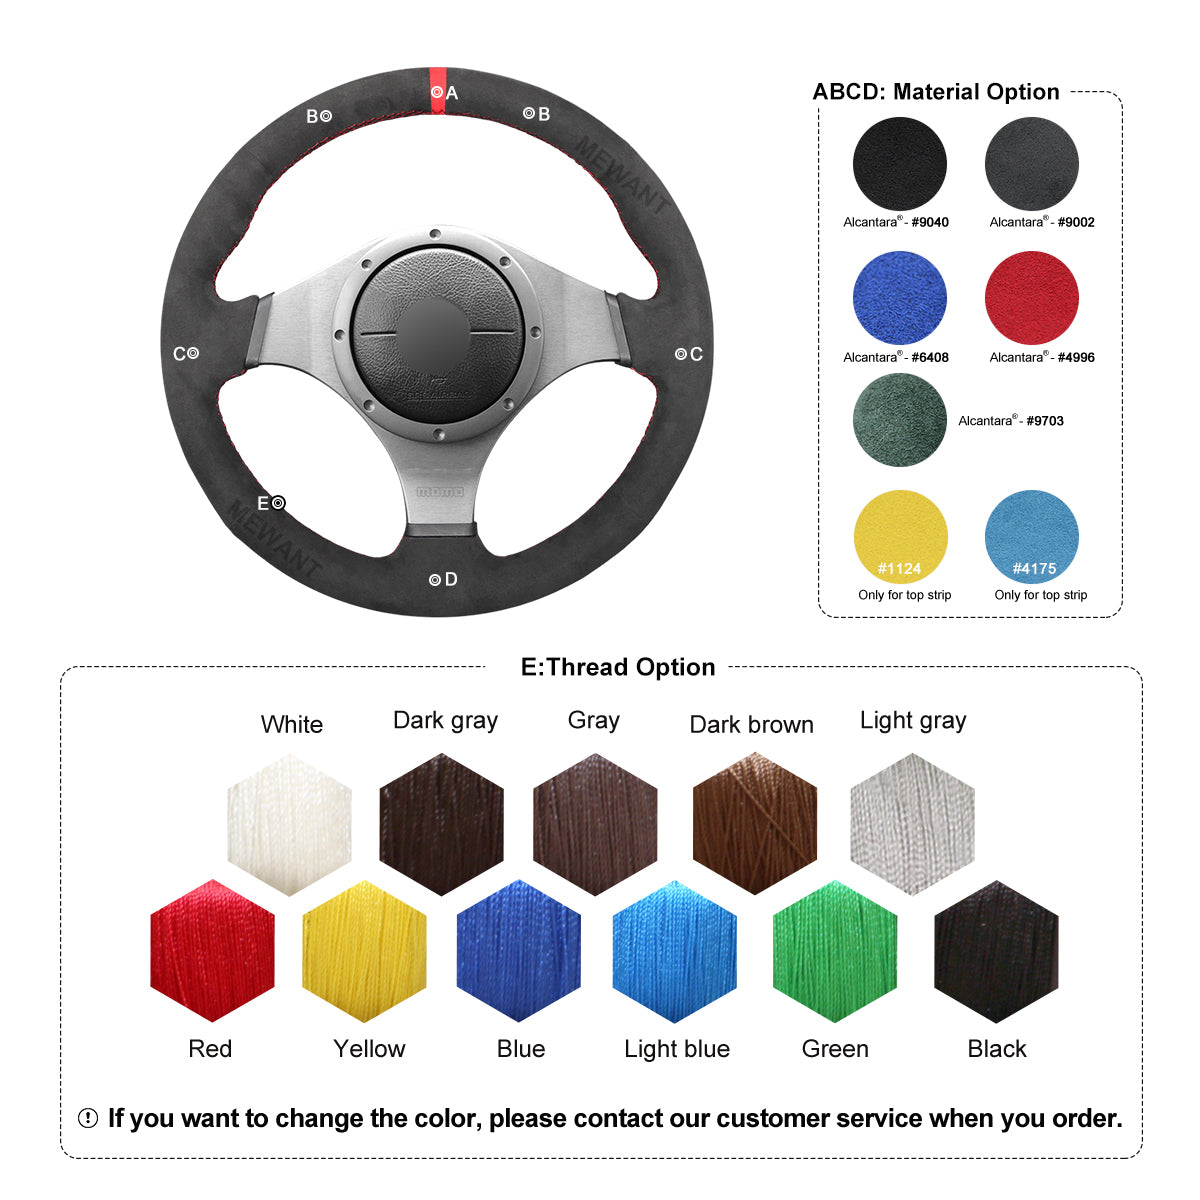 MEWANT Hand Stitch Black Leather Suede Carbon Fiber Car Steering Wheel Cover for Mitsubishi Lancer Evolution EVO IX 9 / VIII 8 / VII 7